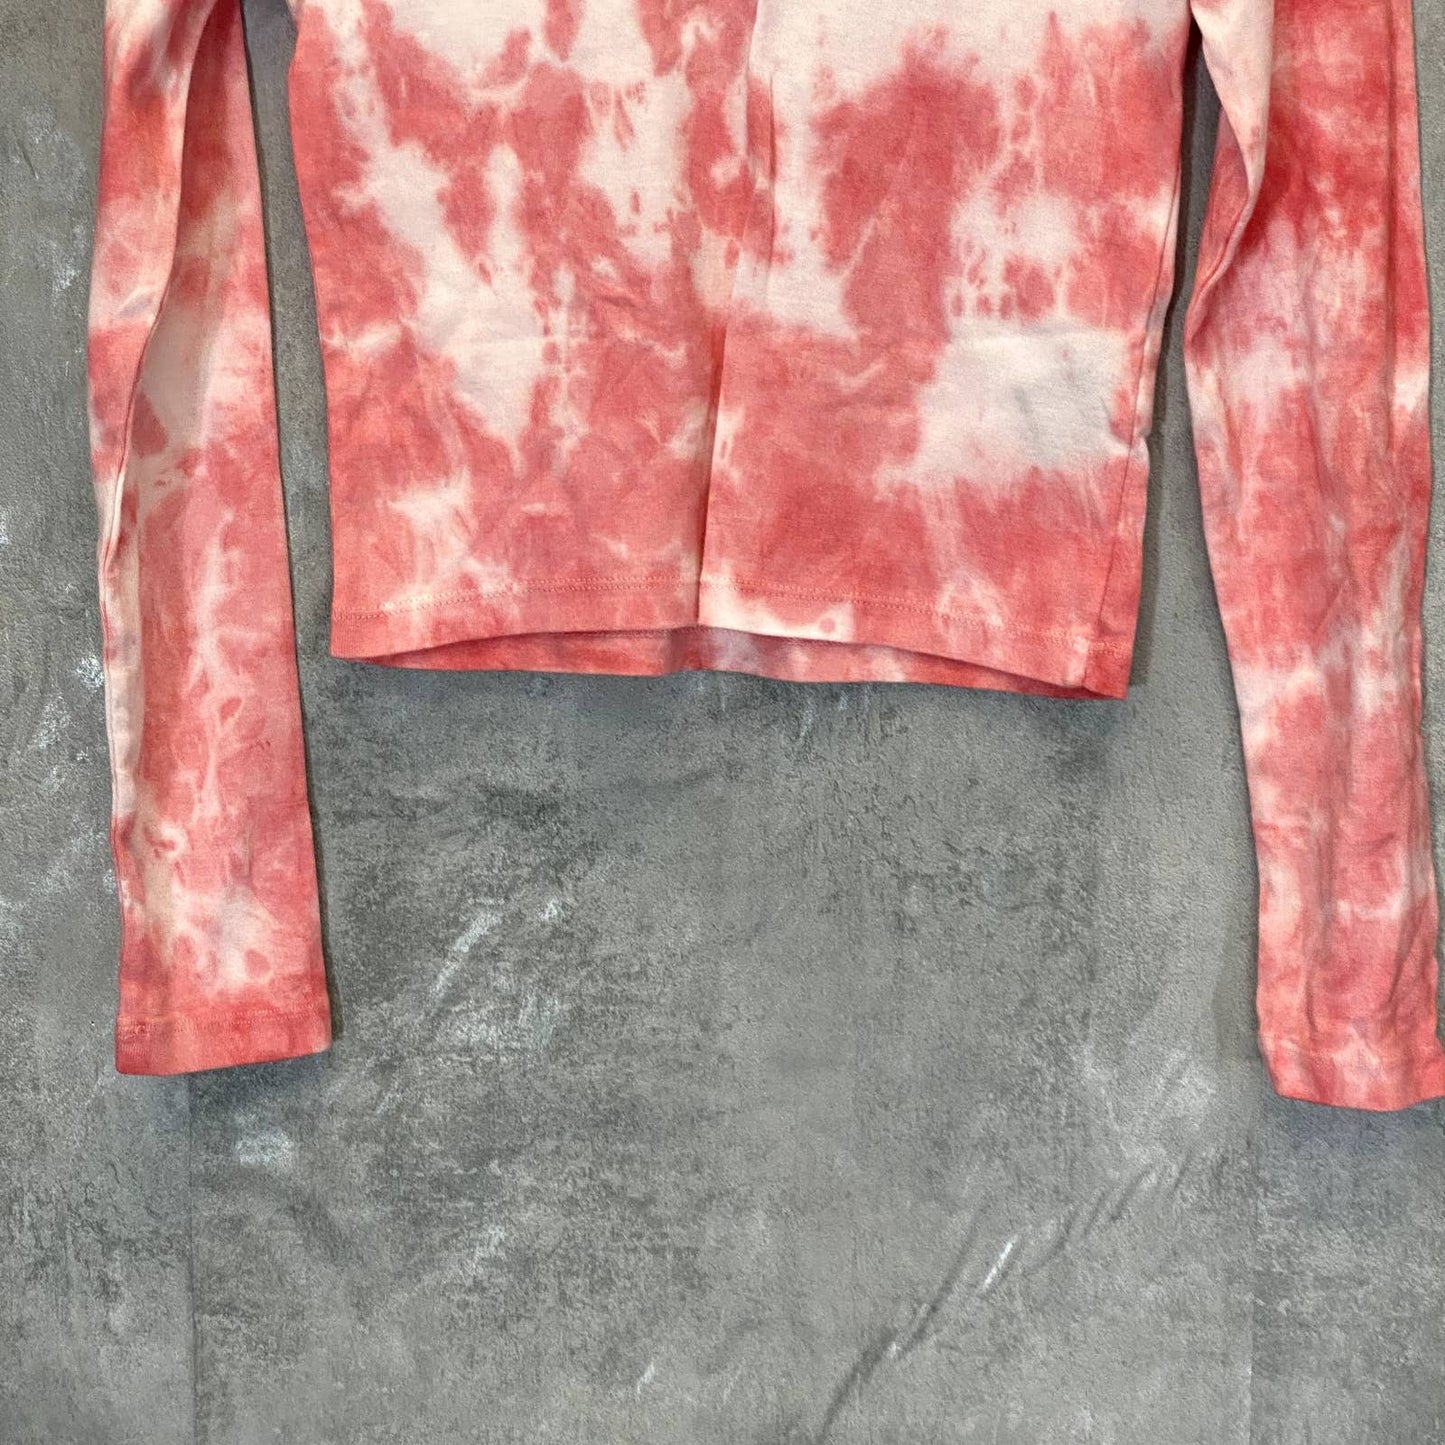 BDG Urban Outfitters Women's Pink Tie-Dye Crewneck Long Sleeve Crop Top SZ M